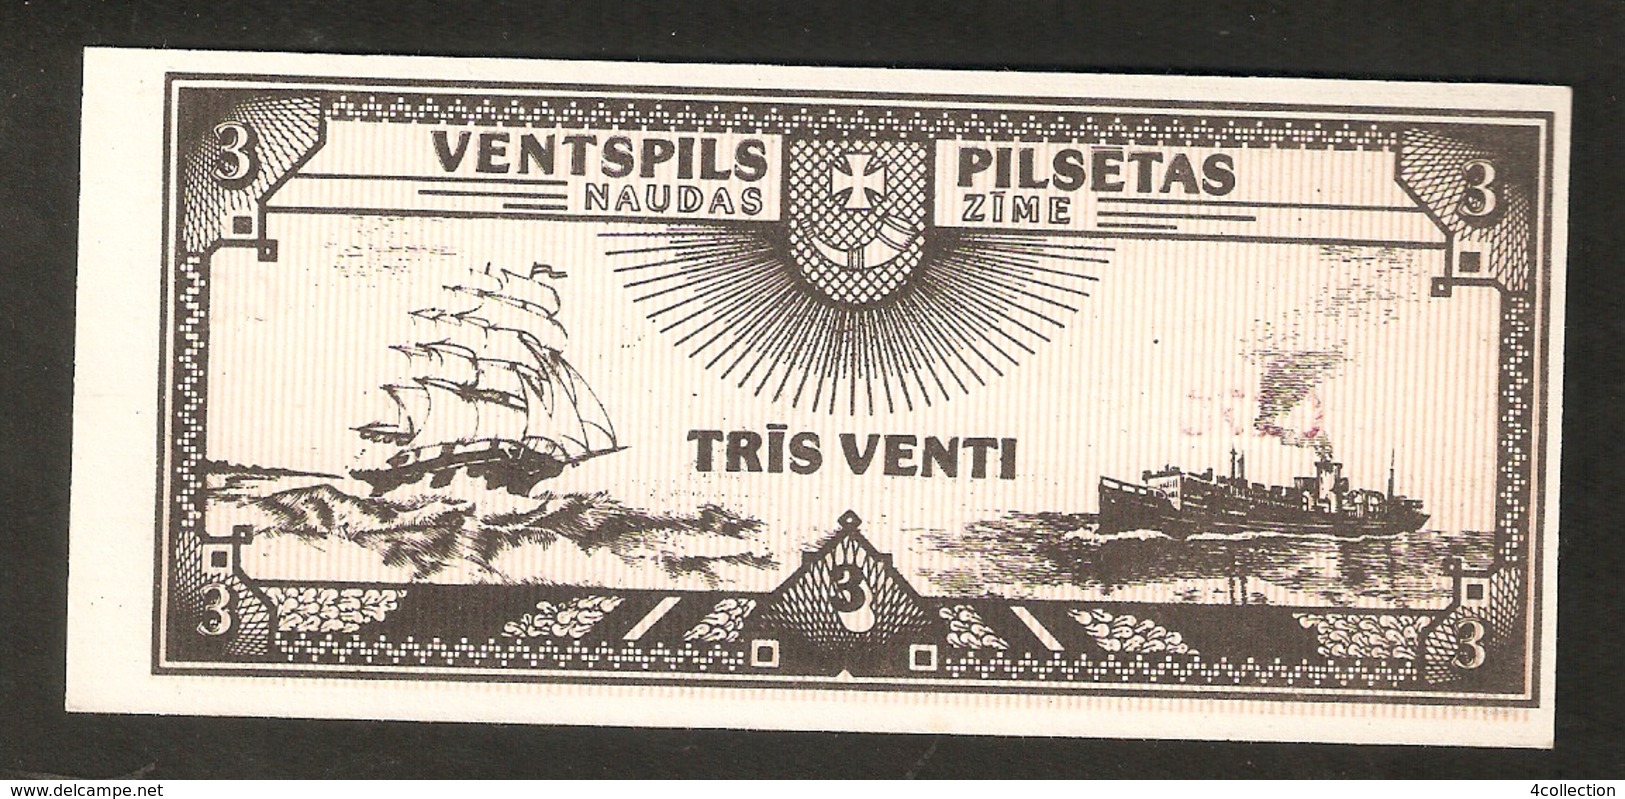 T. Latvia VENTSPILS Naudas Zime 3 VENTI 1990 700th Anniversary Mantu Loterija Lottery Ticket No. 03 - 0278 - Latvia